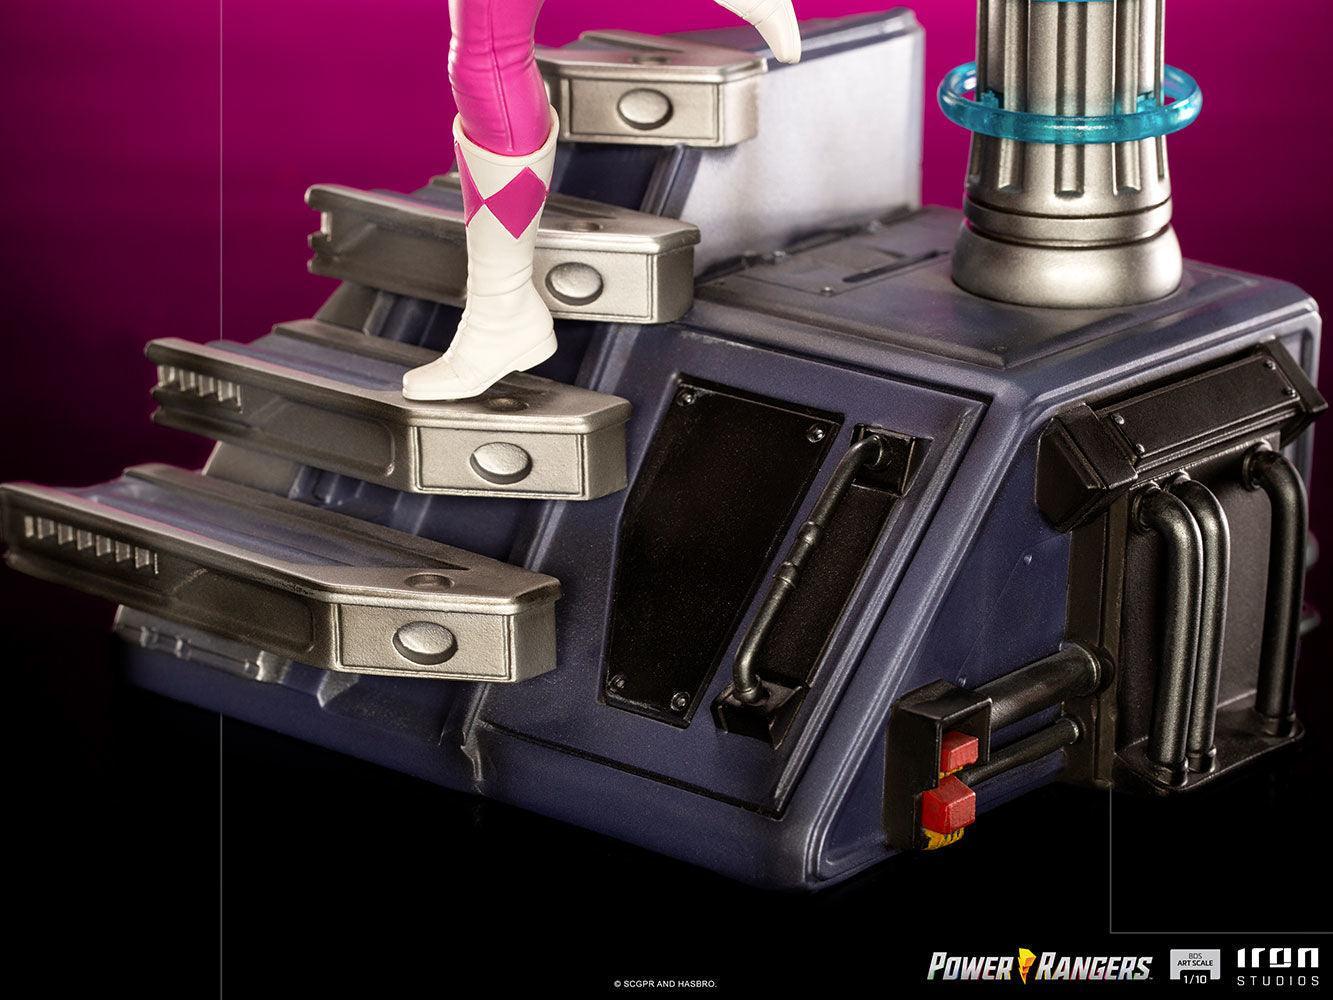 IRO28174 Power Rangers - Pink Ranger 1:10 Scale Statue - Iron Studios - Titan Pop Culture